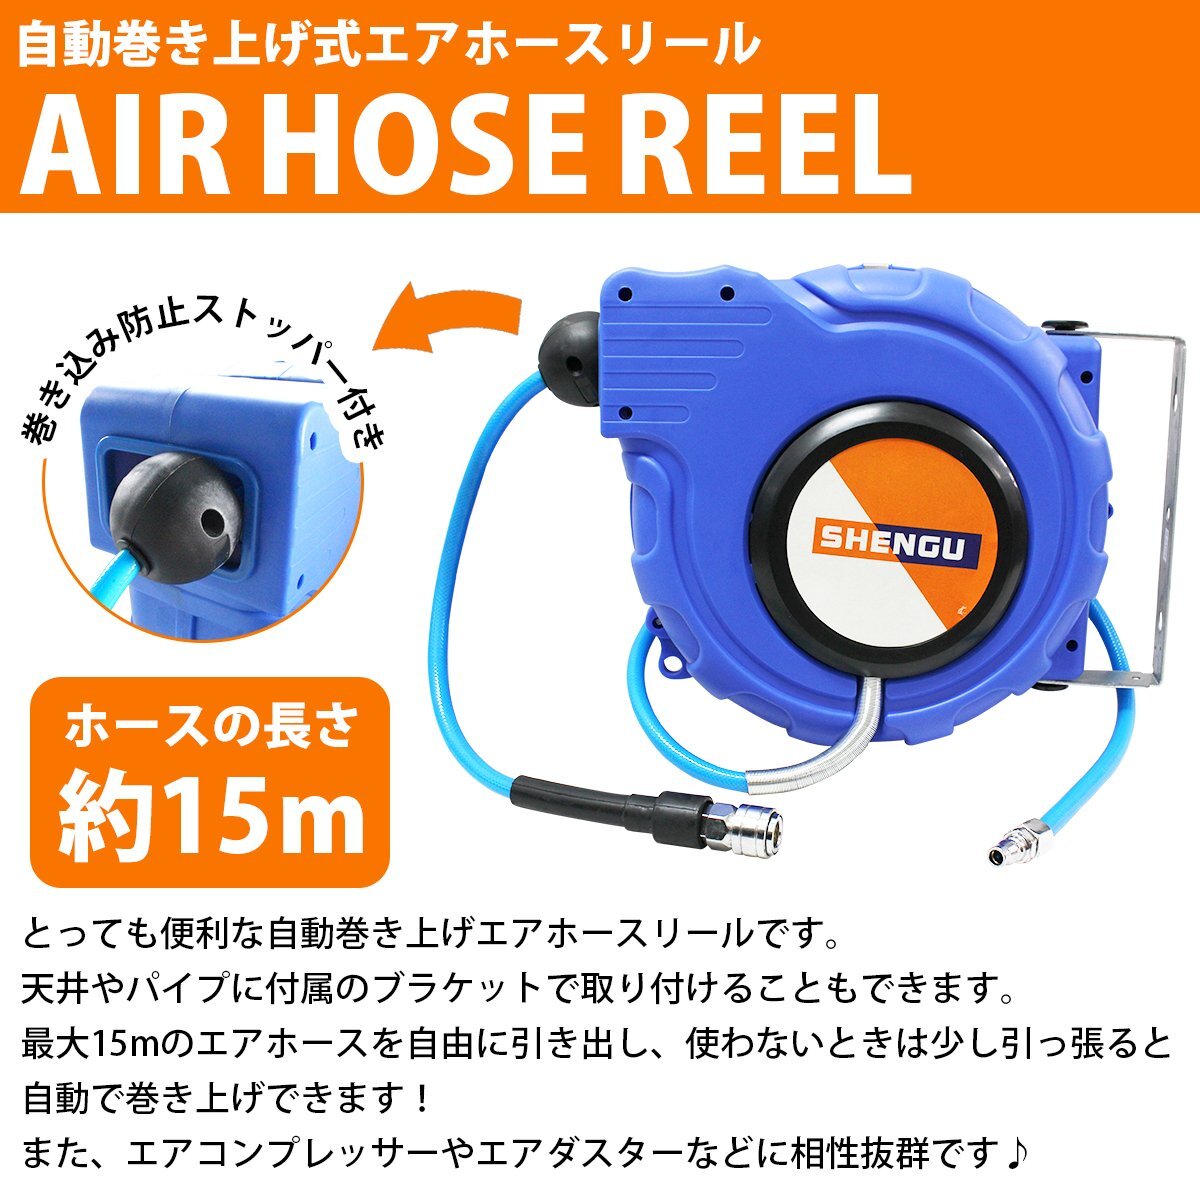  air hose reel 15m self-winding watch hanging lowering ornament air tool air hose drum type compressor hanging blue blue 